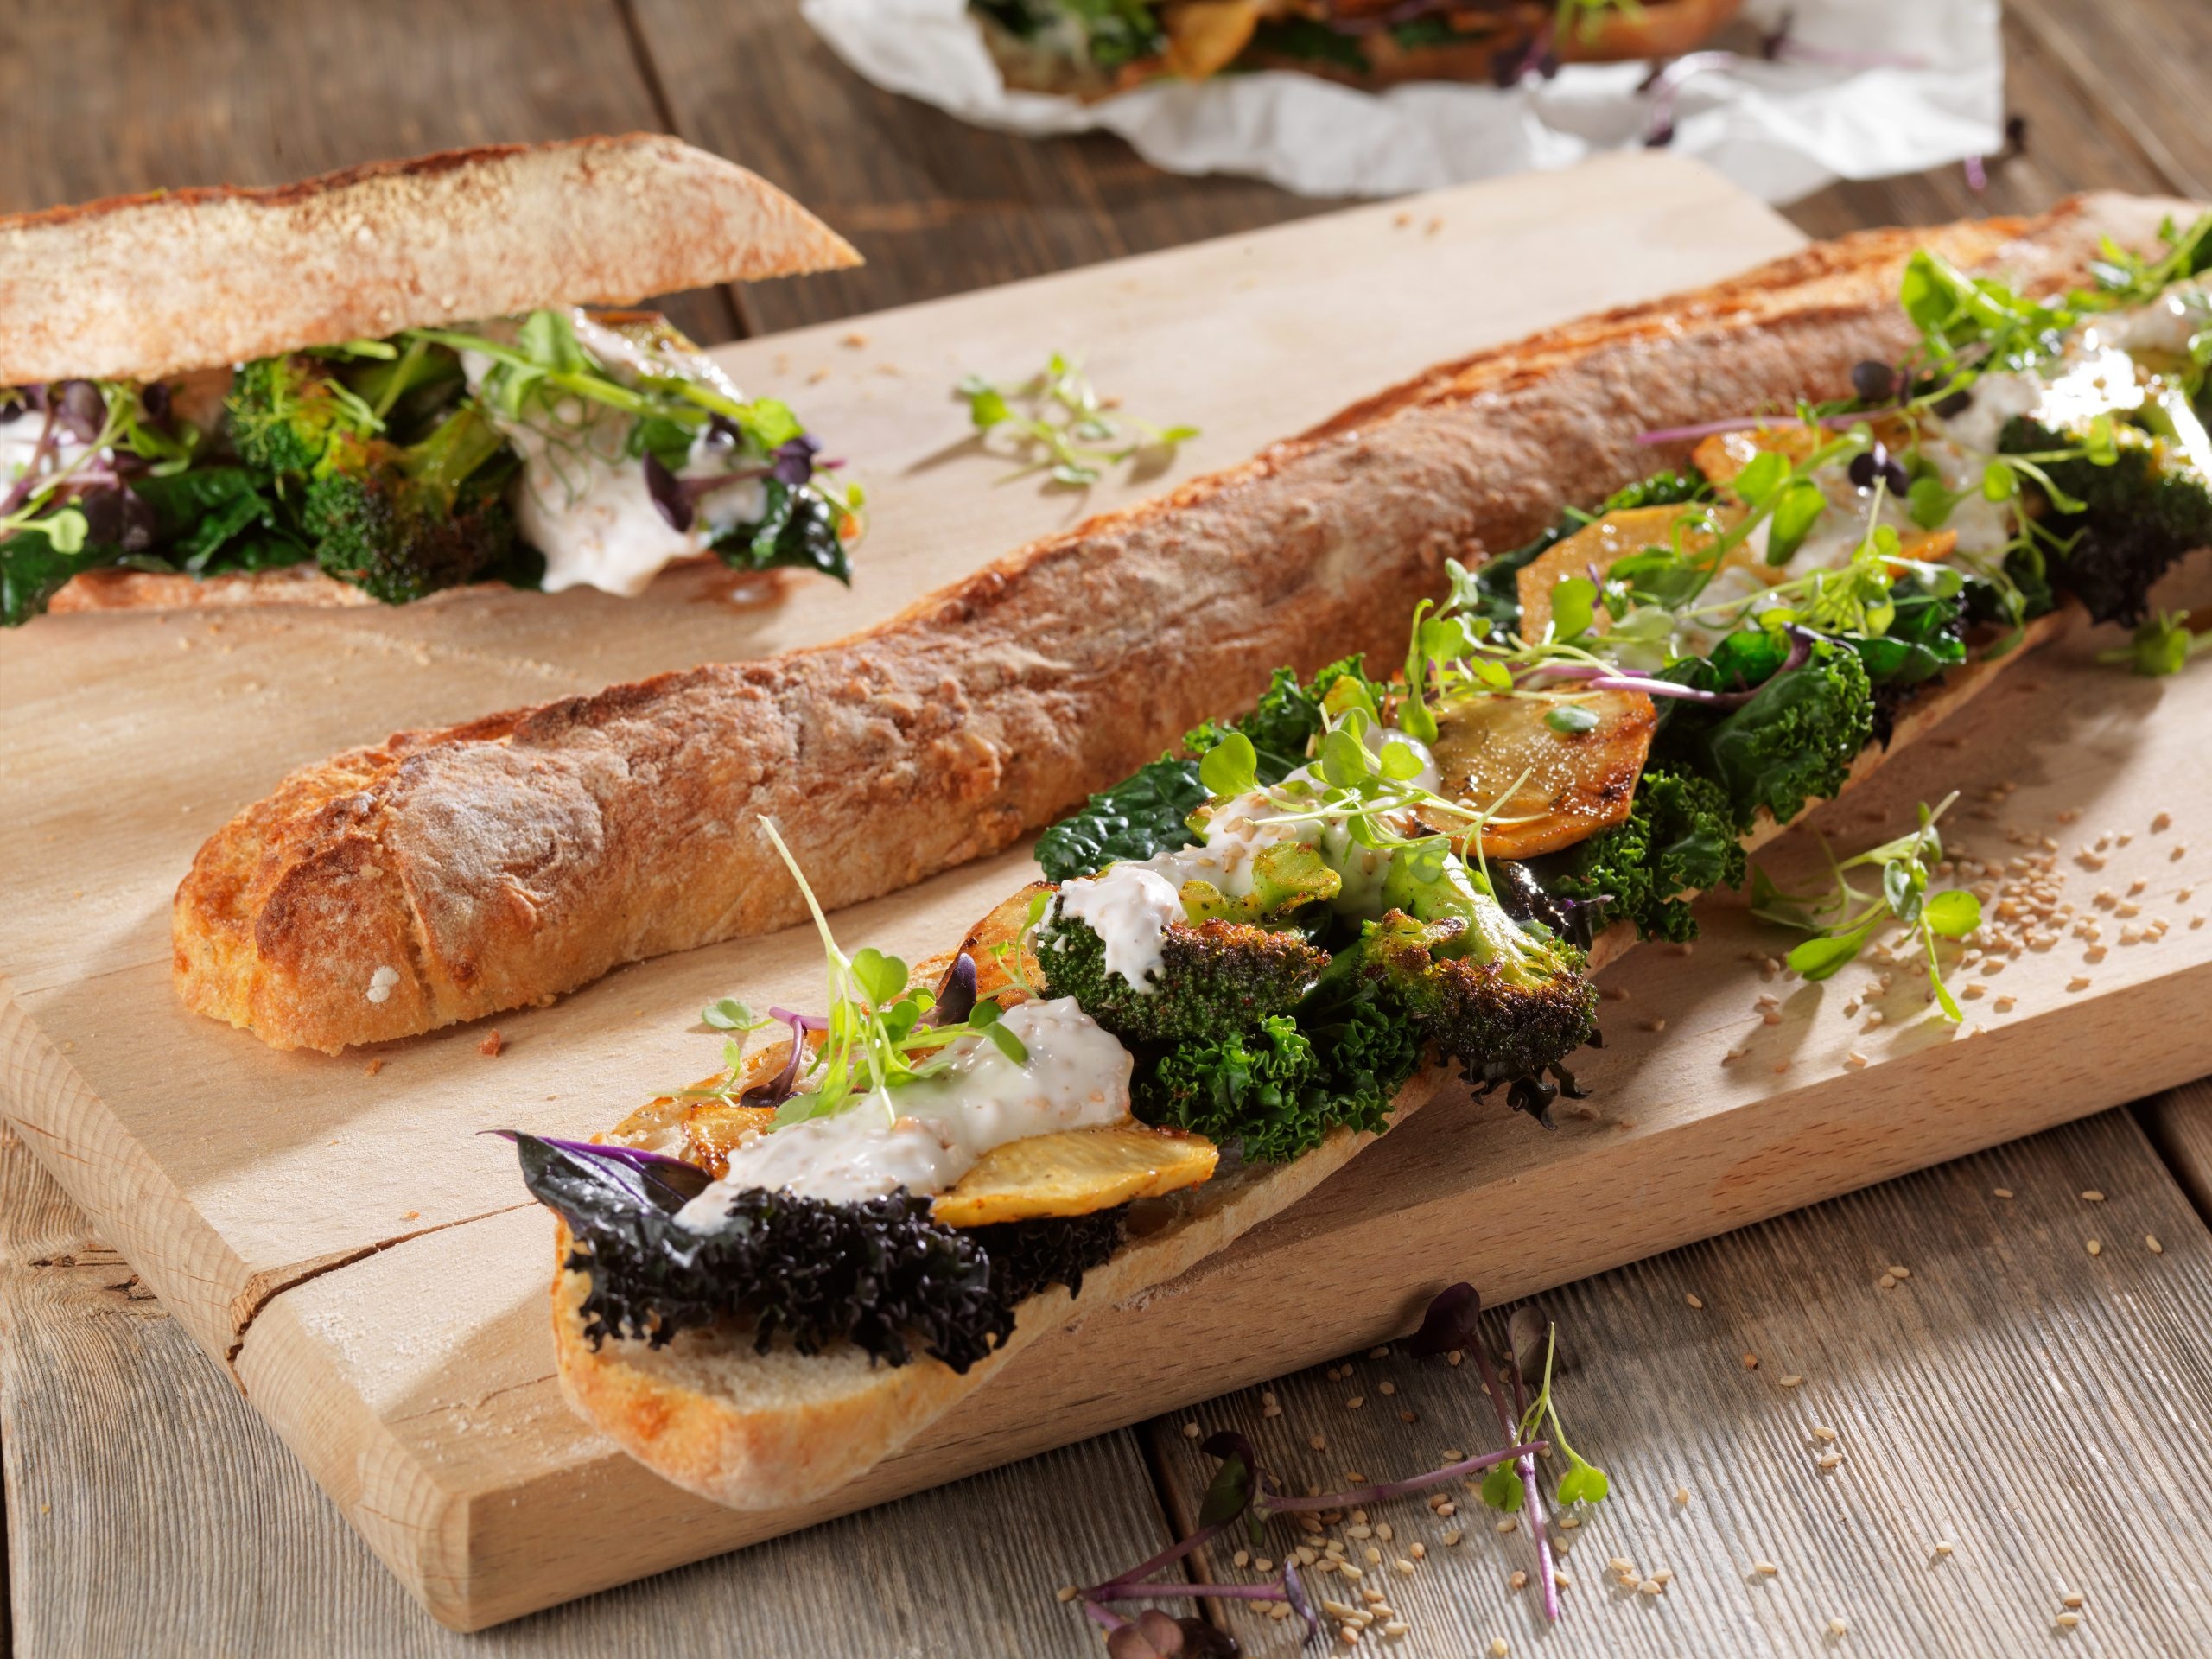 Baguette: A long, thin type of bread of French origin. 2560x1920 HD Wallpaper.